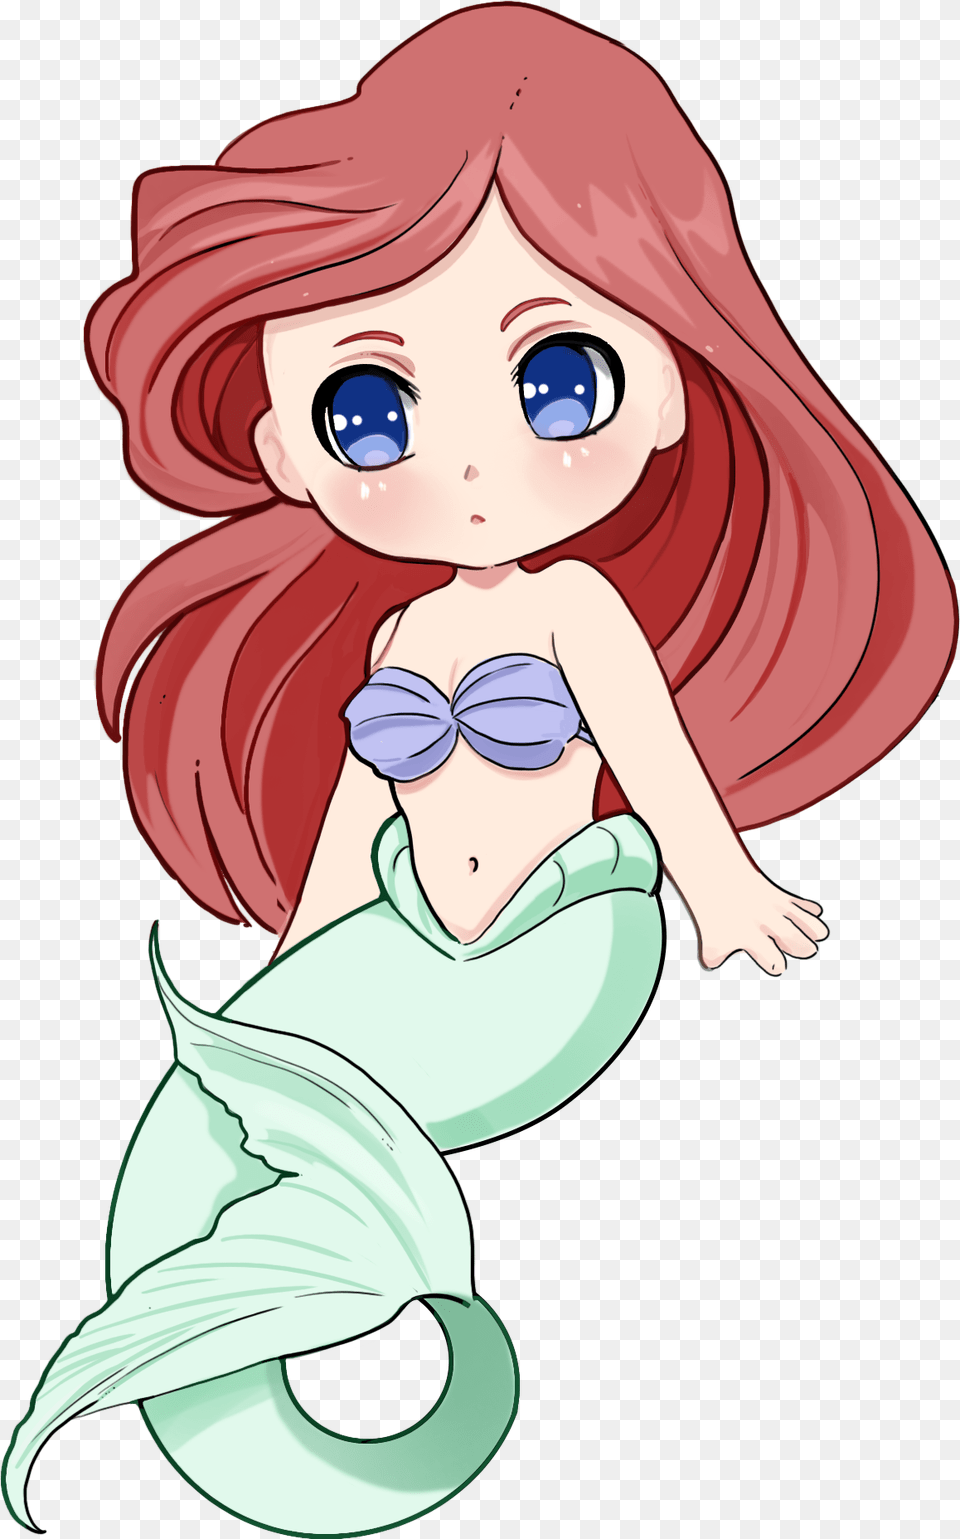 Ariel The Little Mermaid Disney Princess Clip Art By Cartoon, Book, Comics, Publication, Baby Png